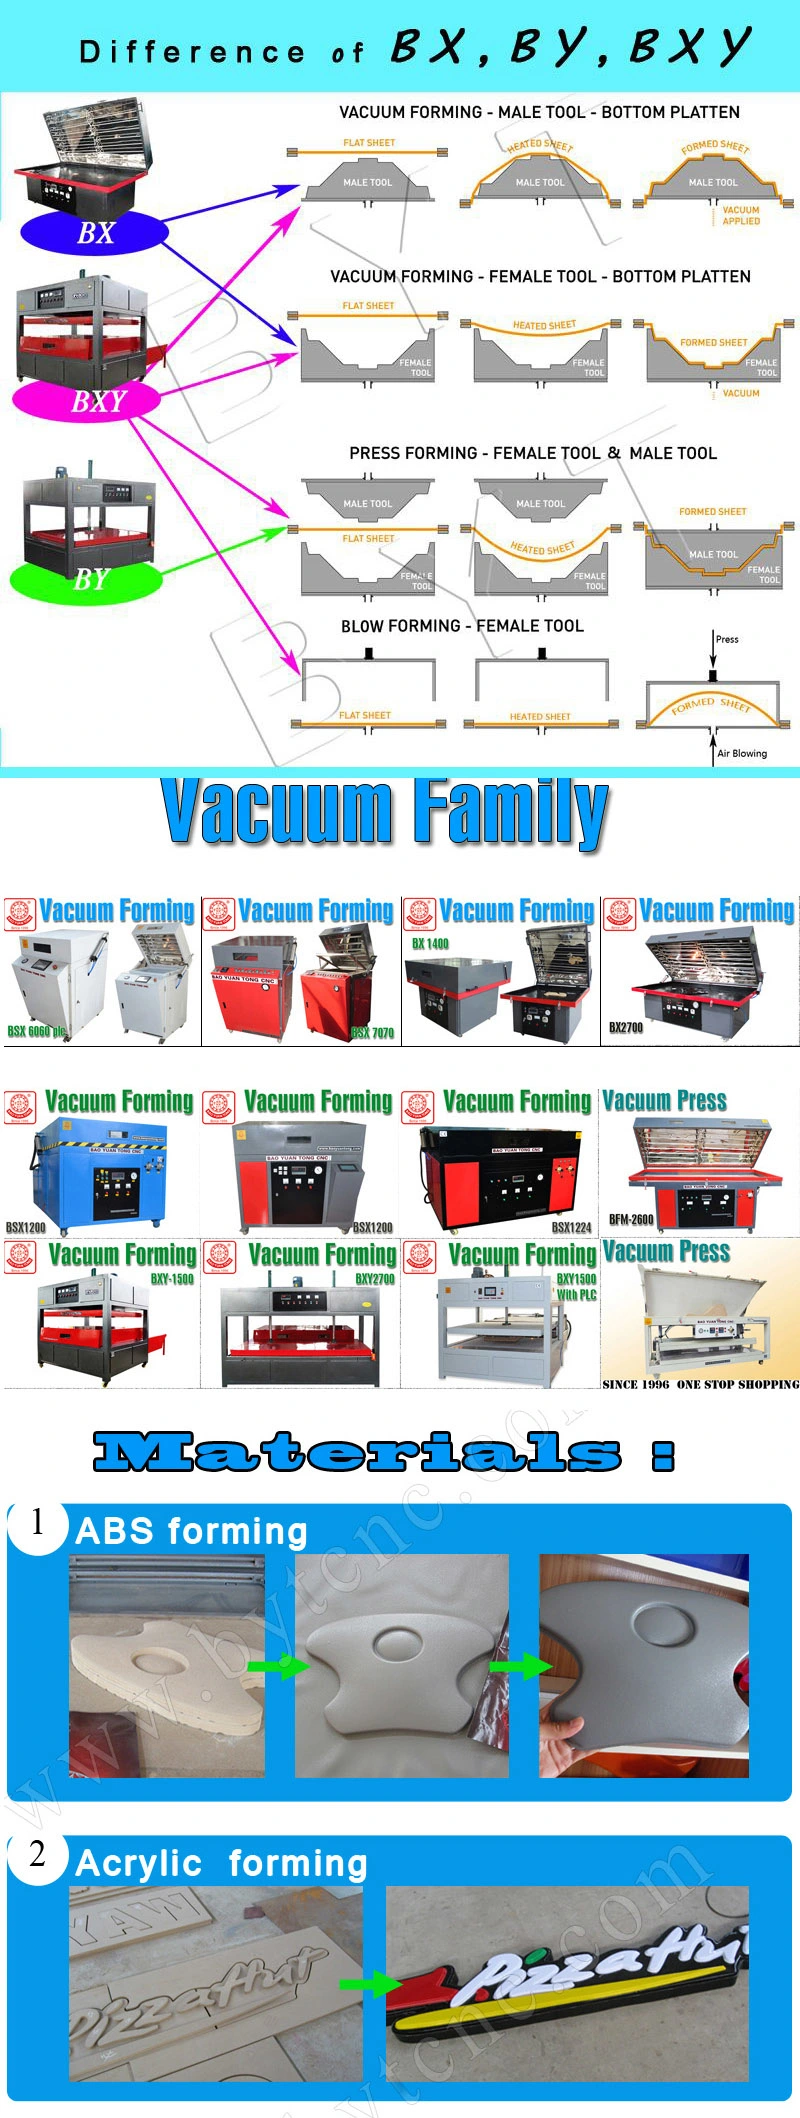 PS Vacuum Form Thermoplastic Vacuum Forming